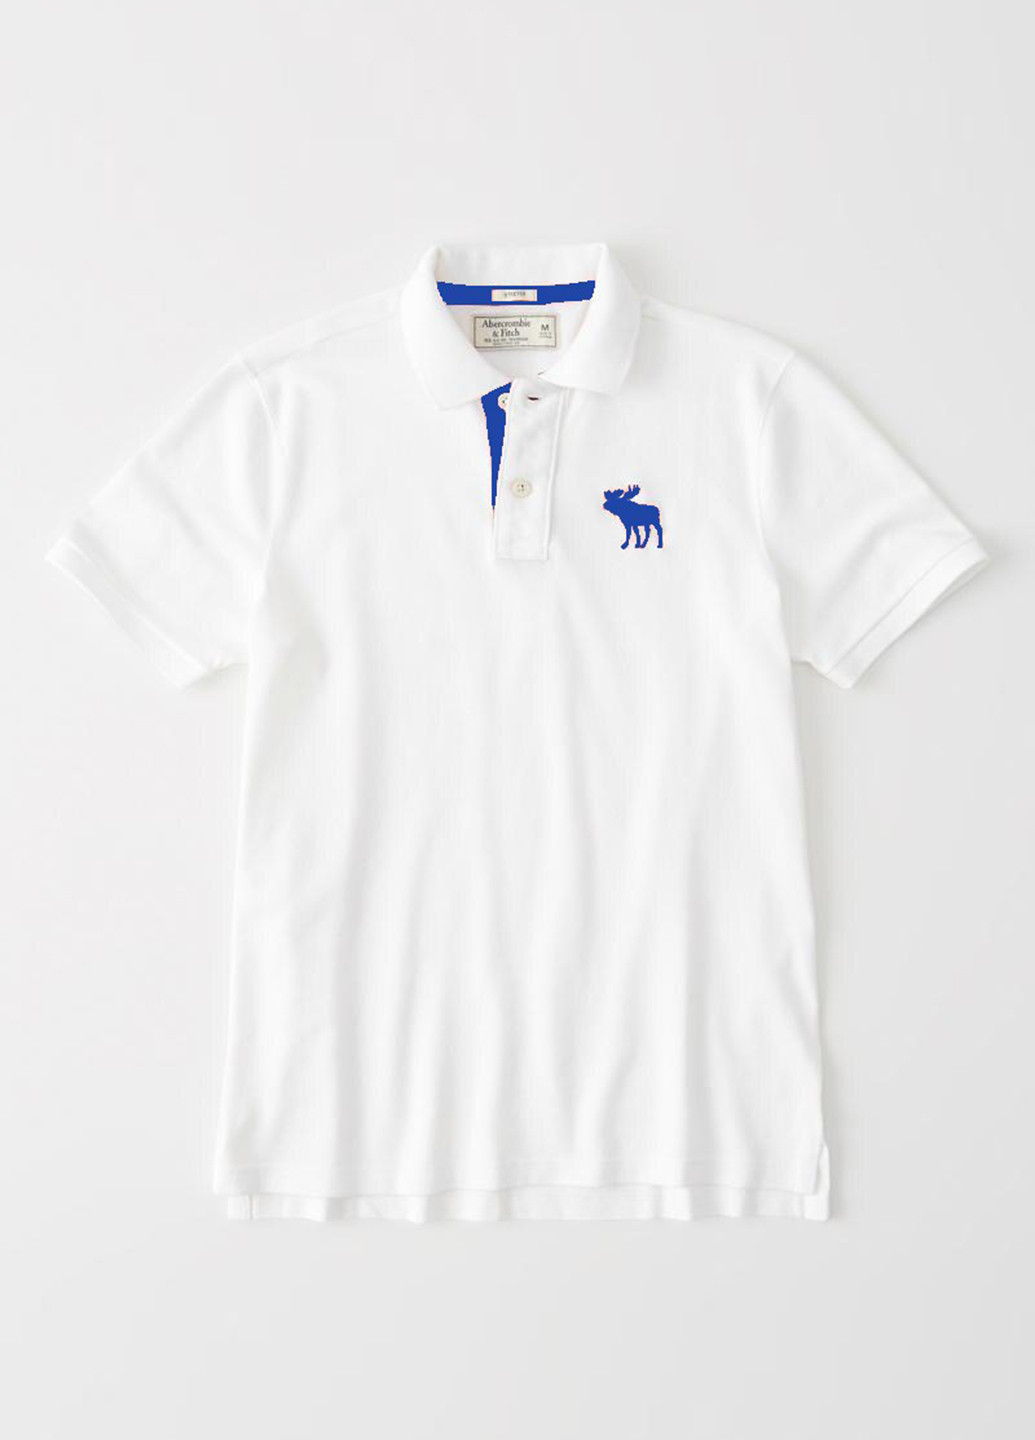 Белая футболка-поло для мужчин Abercrombie & Fitch с логотипом